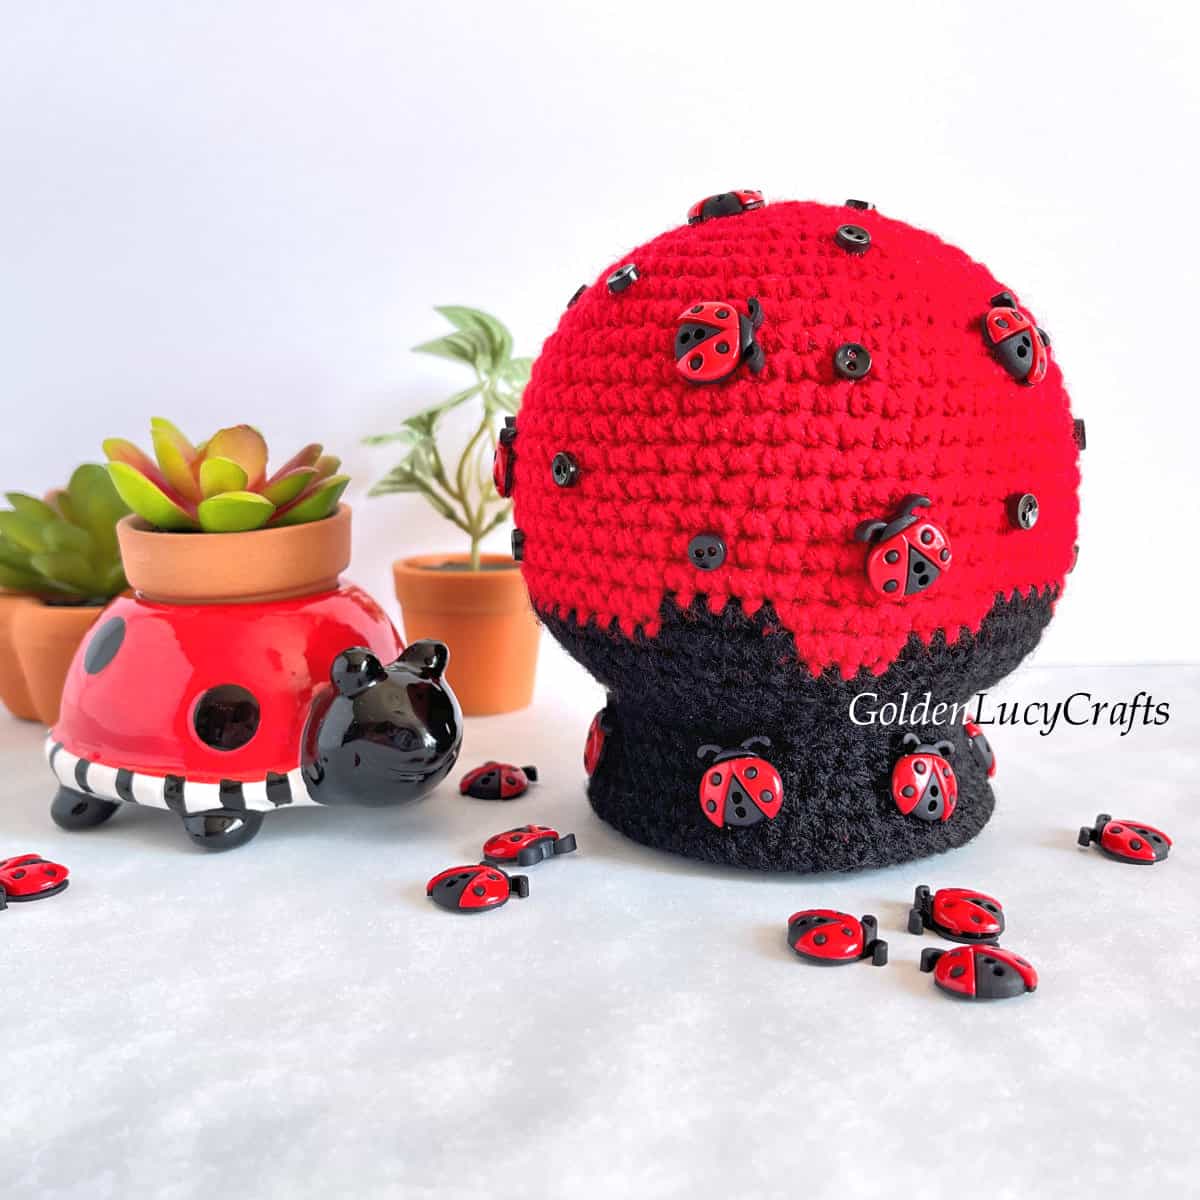 Crochet ladybug themed snow globe.